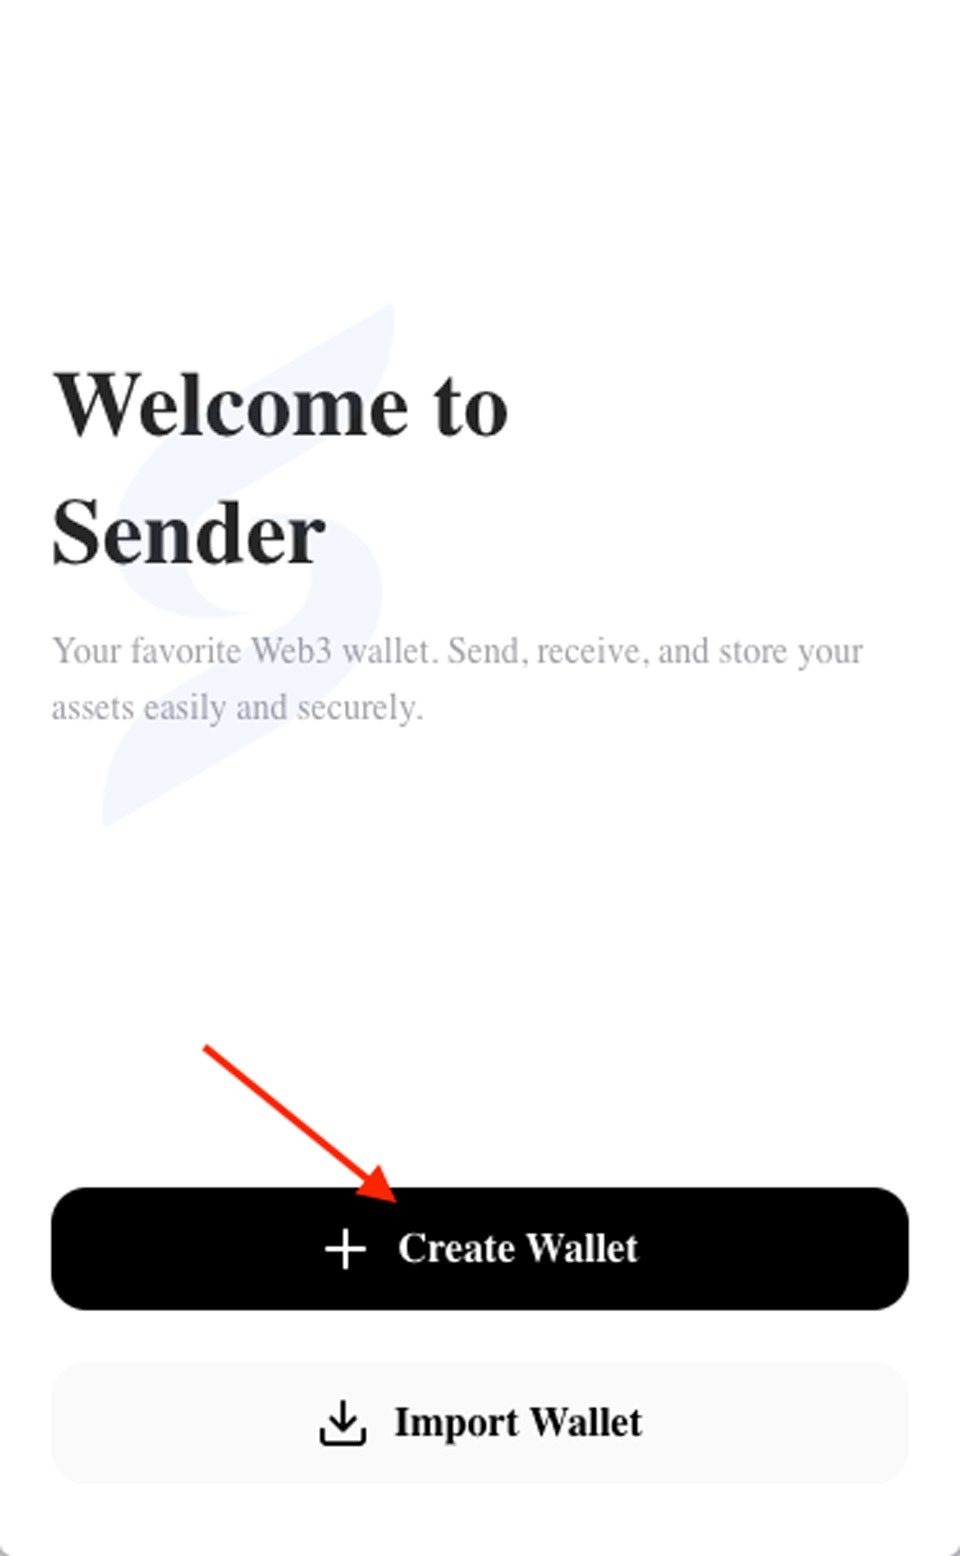  Chọn “Create Wallet”